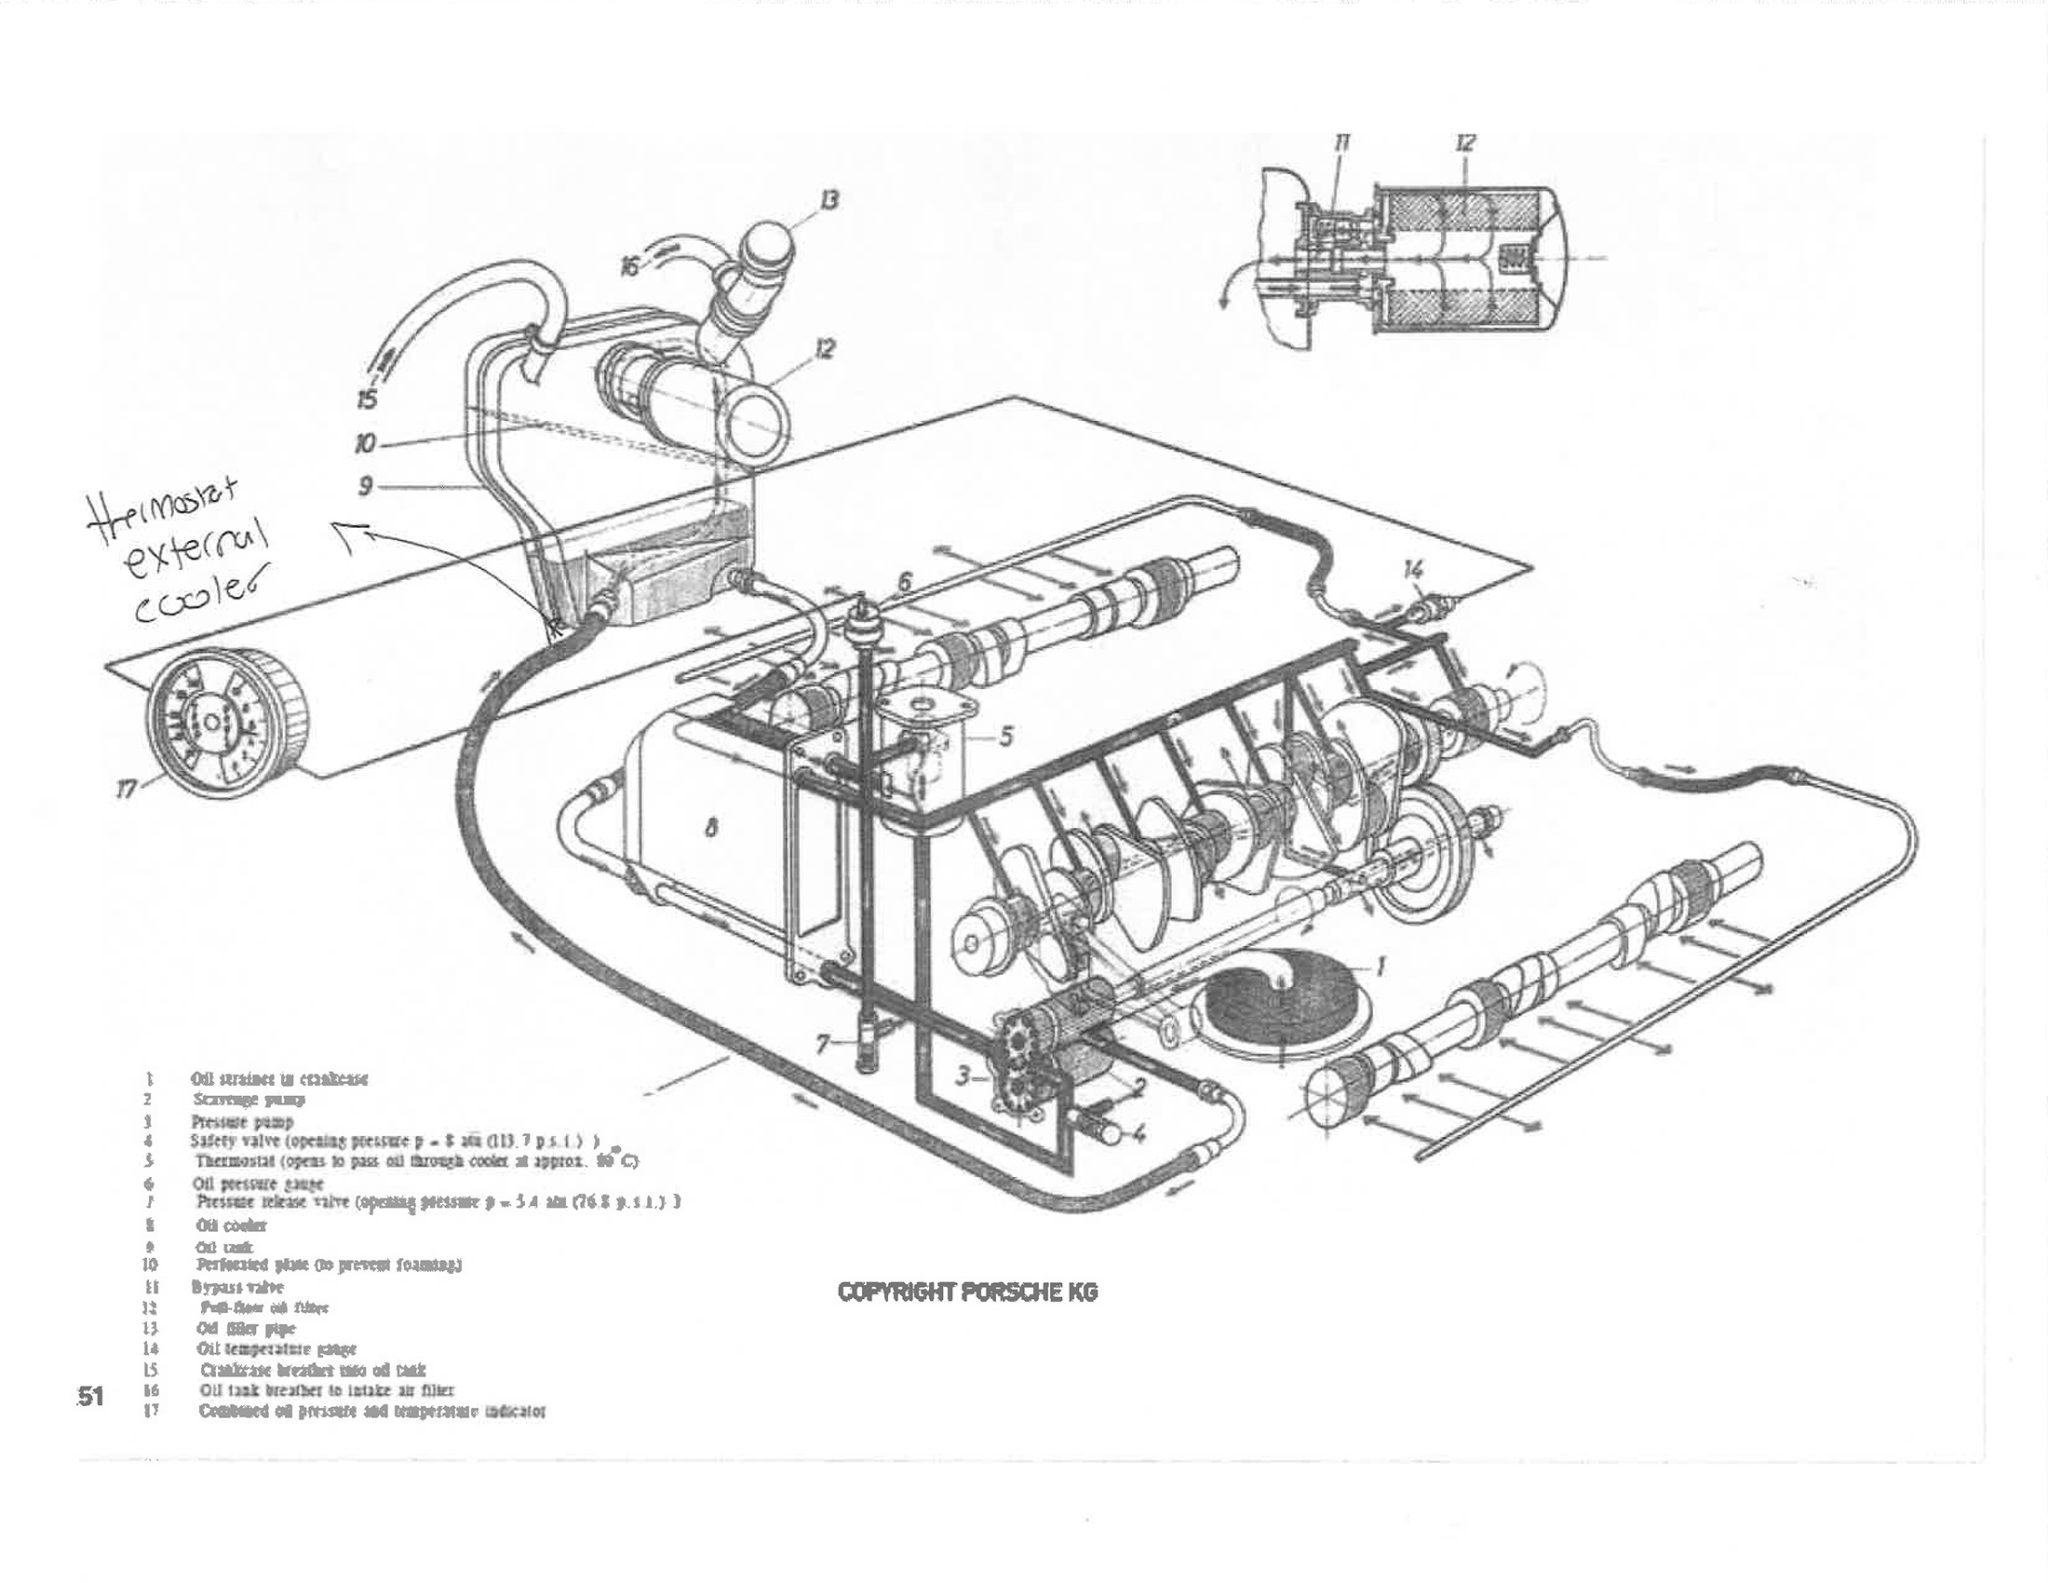 Porsche 911/930 Turbo Engine Oil Cooler Features (CSF #8242)